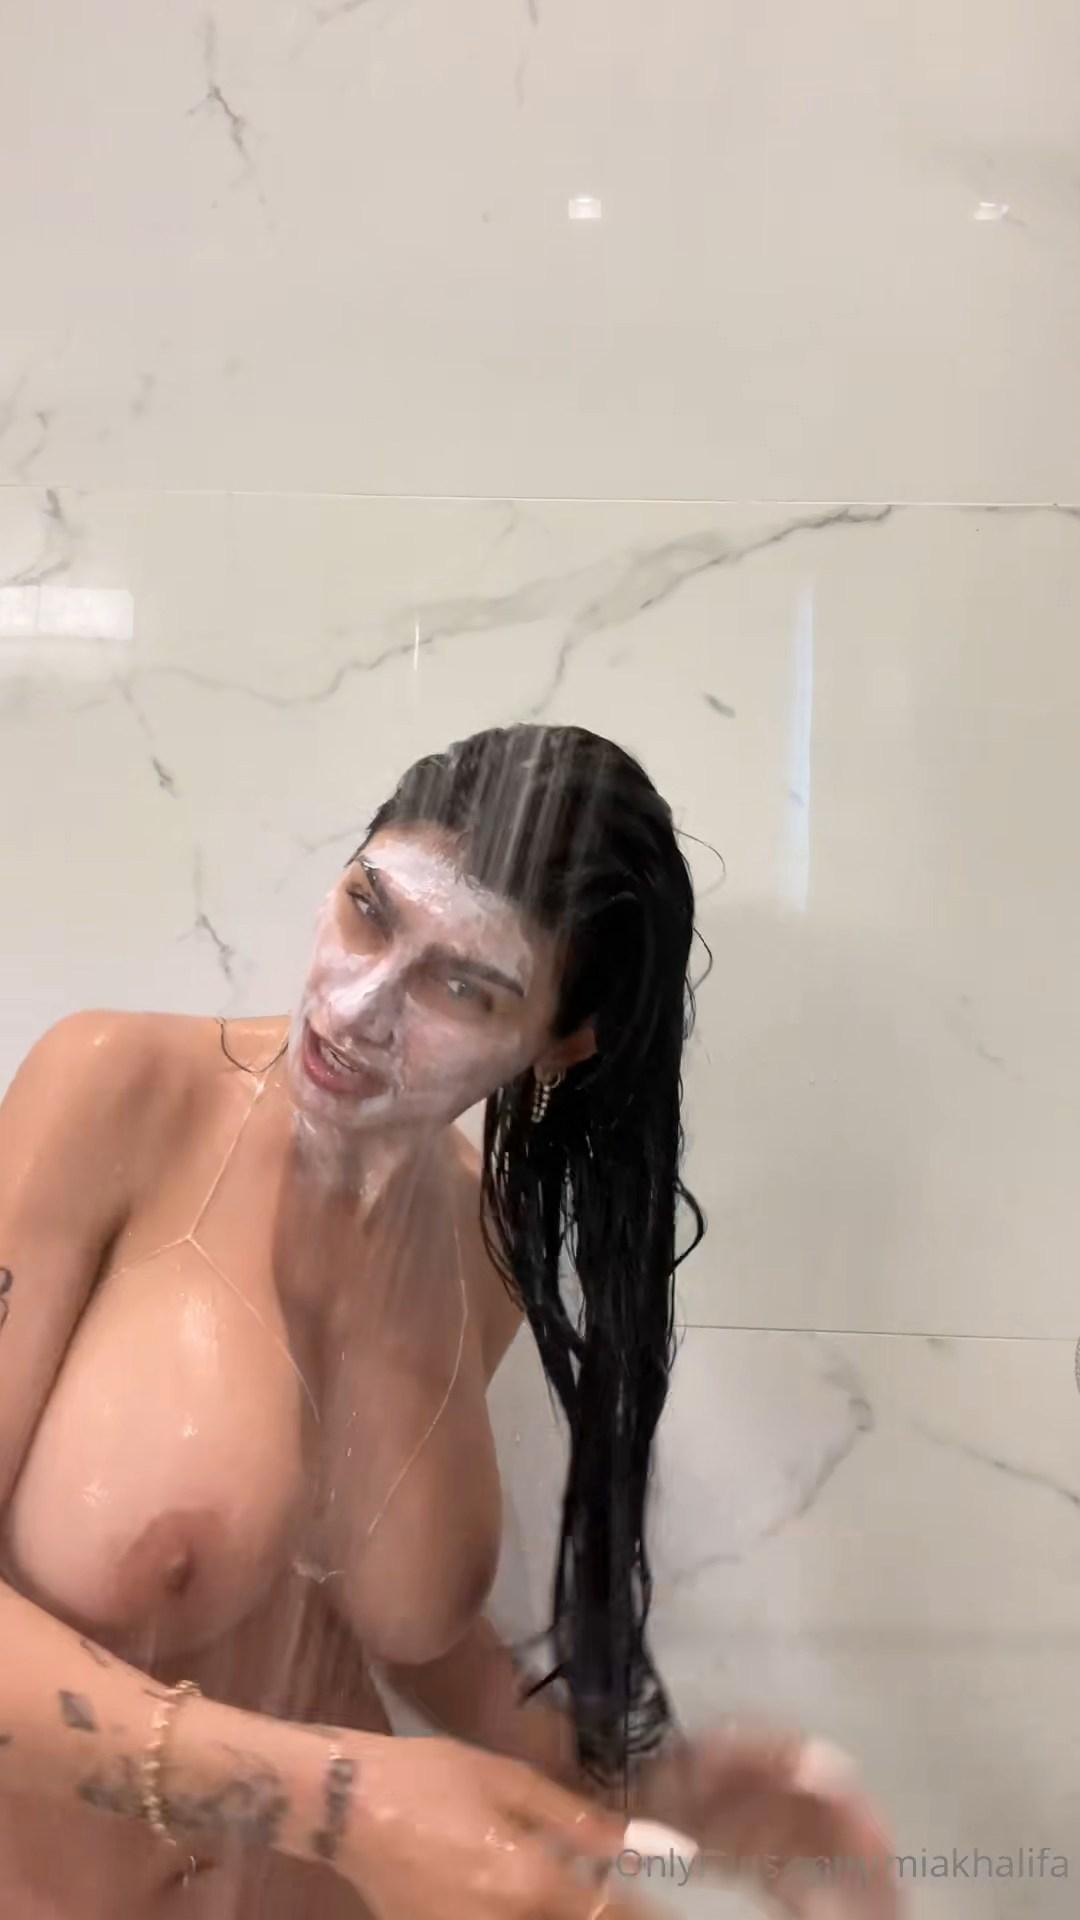 mia khalifa nude shower shaving onlyfans video leaked mdodrh